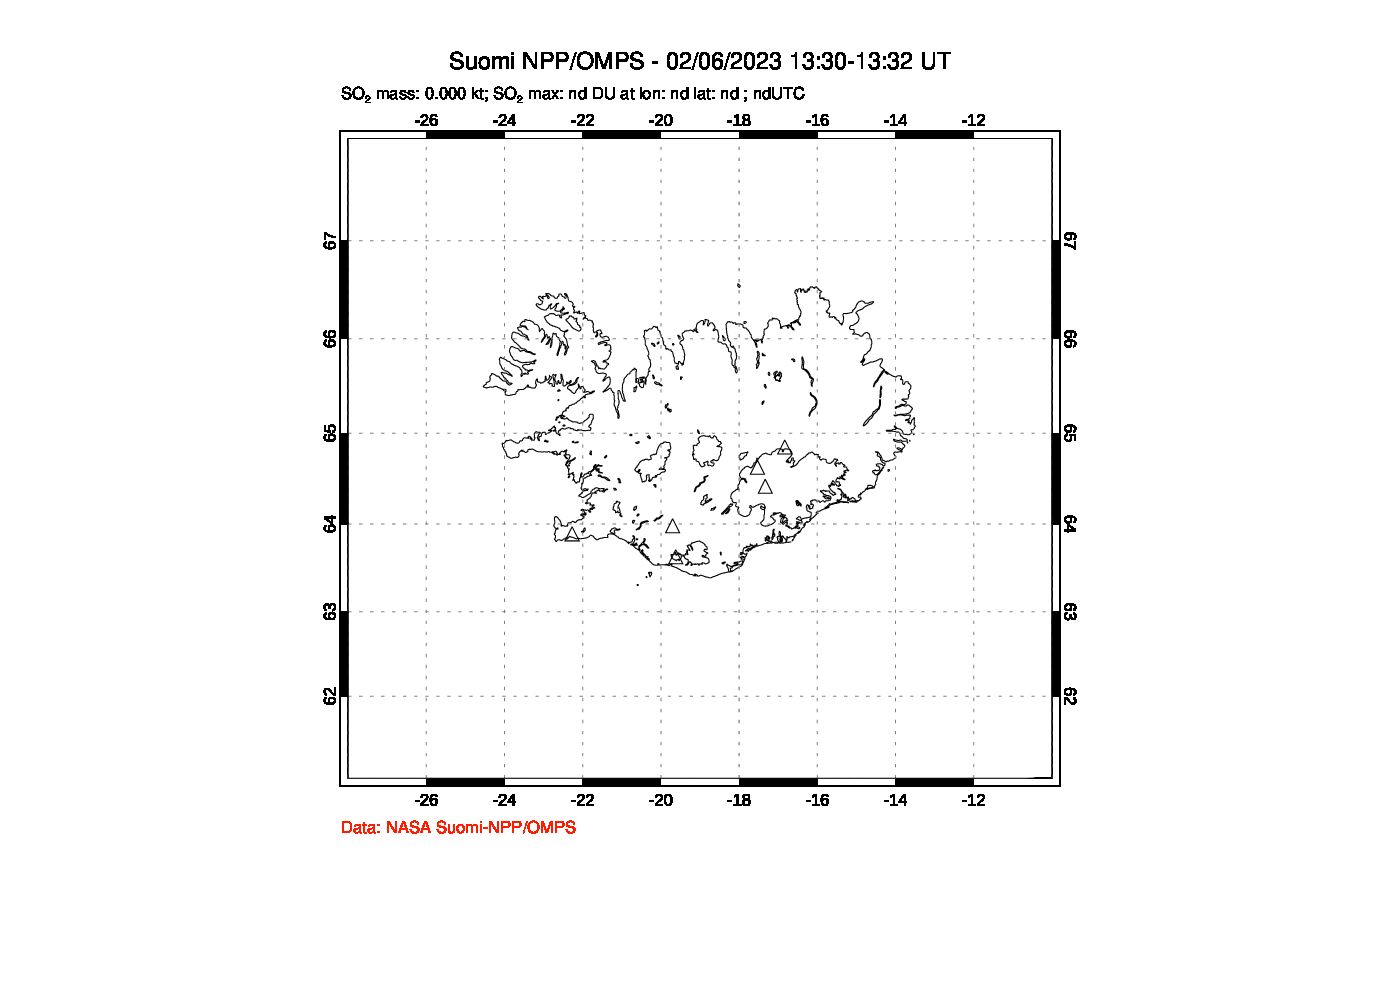 A sulfur dioxide image over Iceland on Feb 06, 2023.